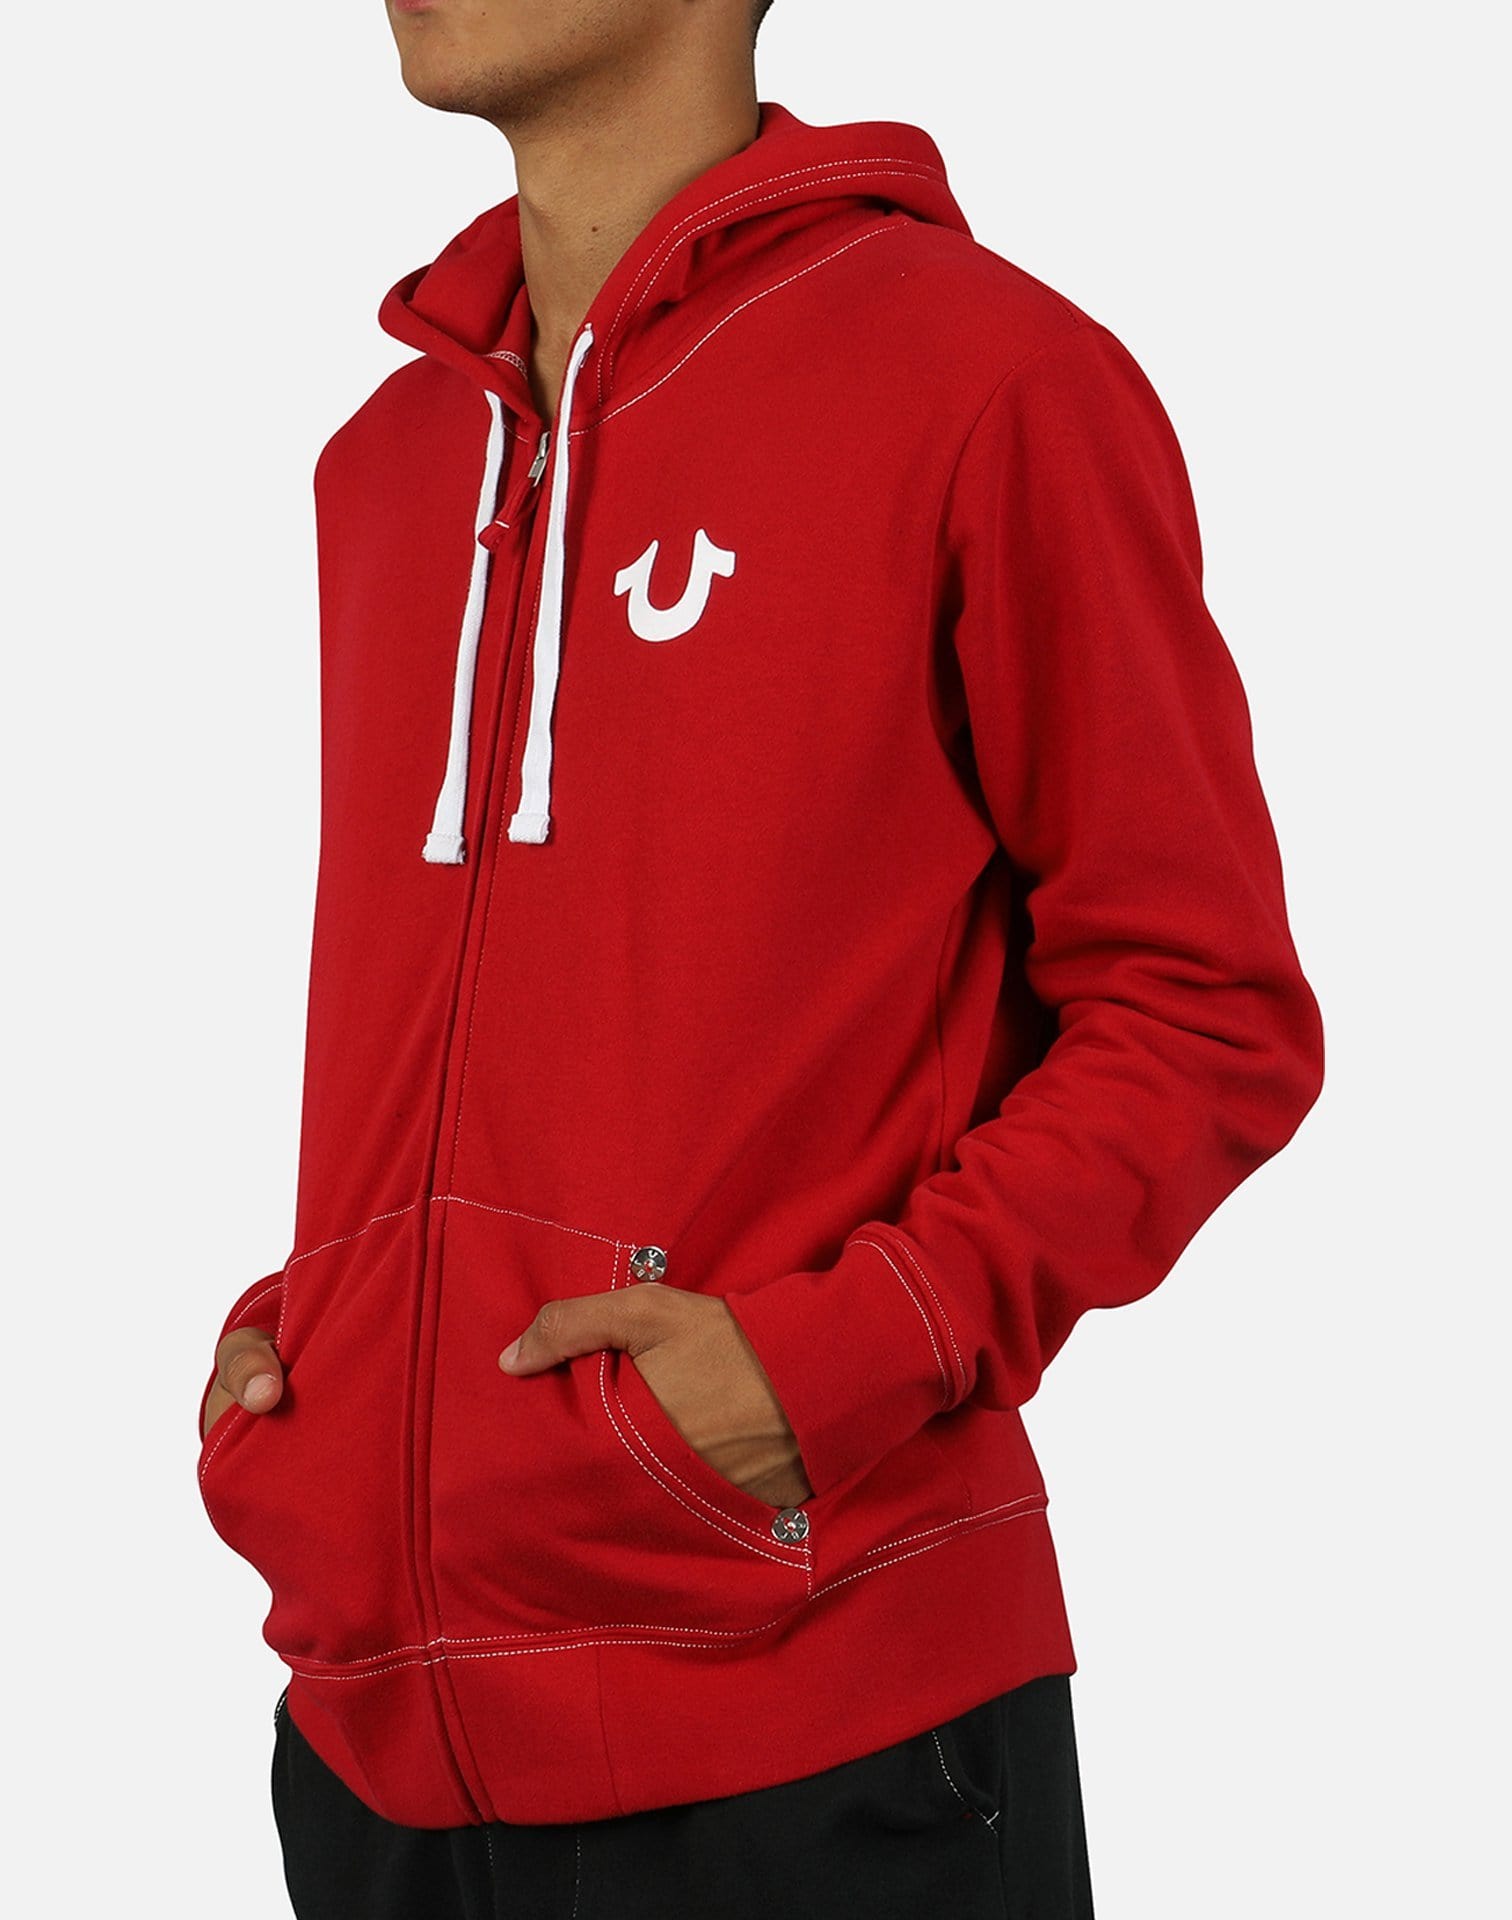 true religion zipper hoodie